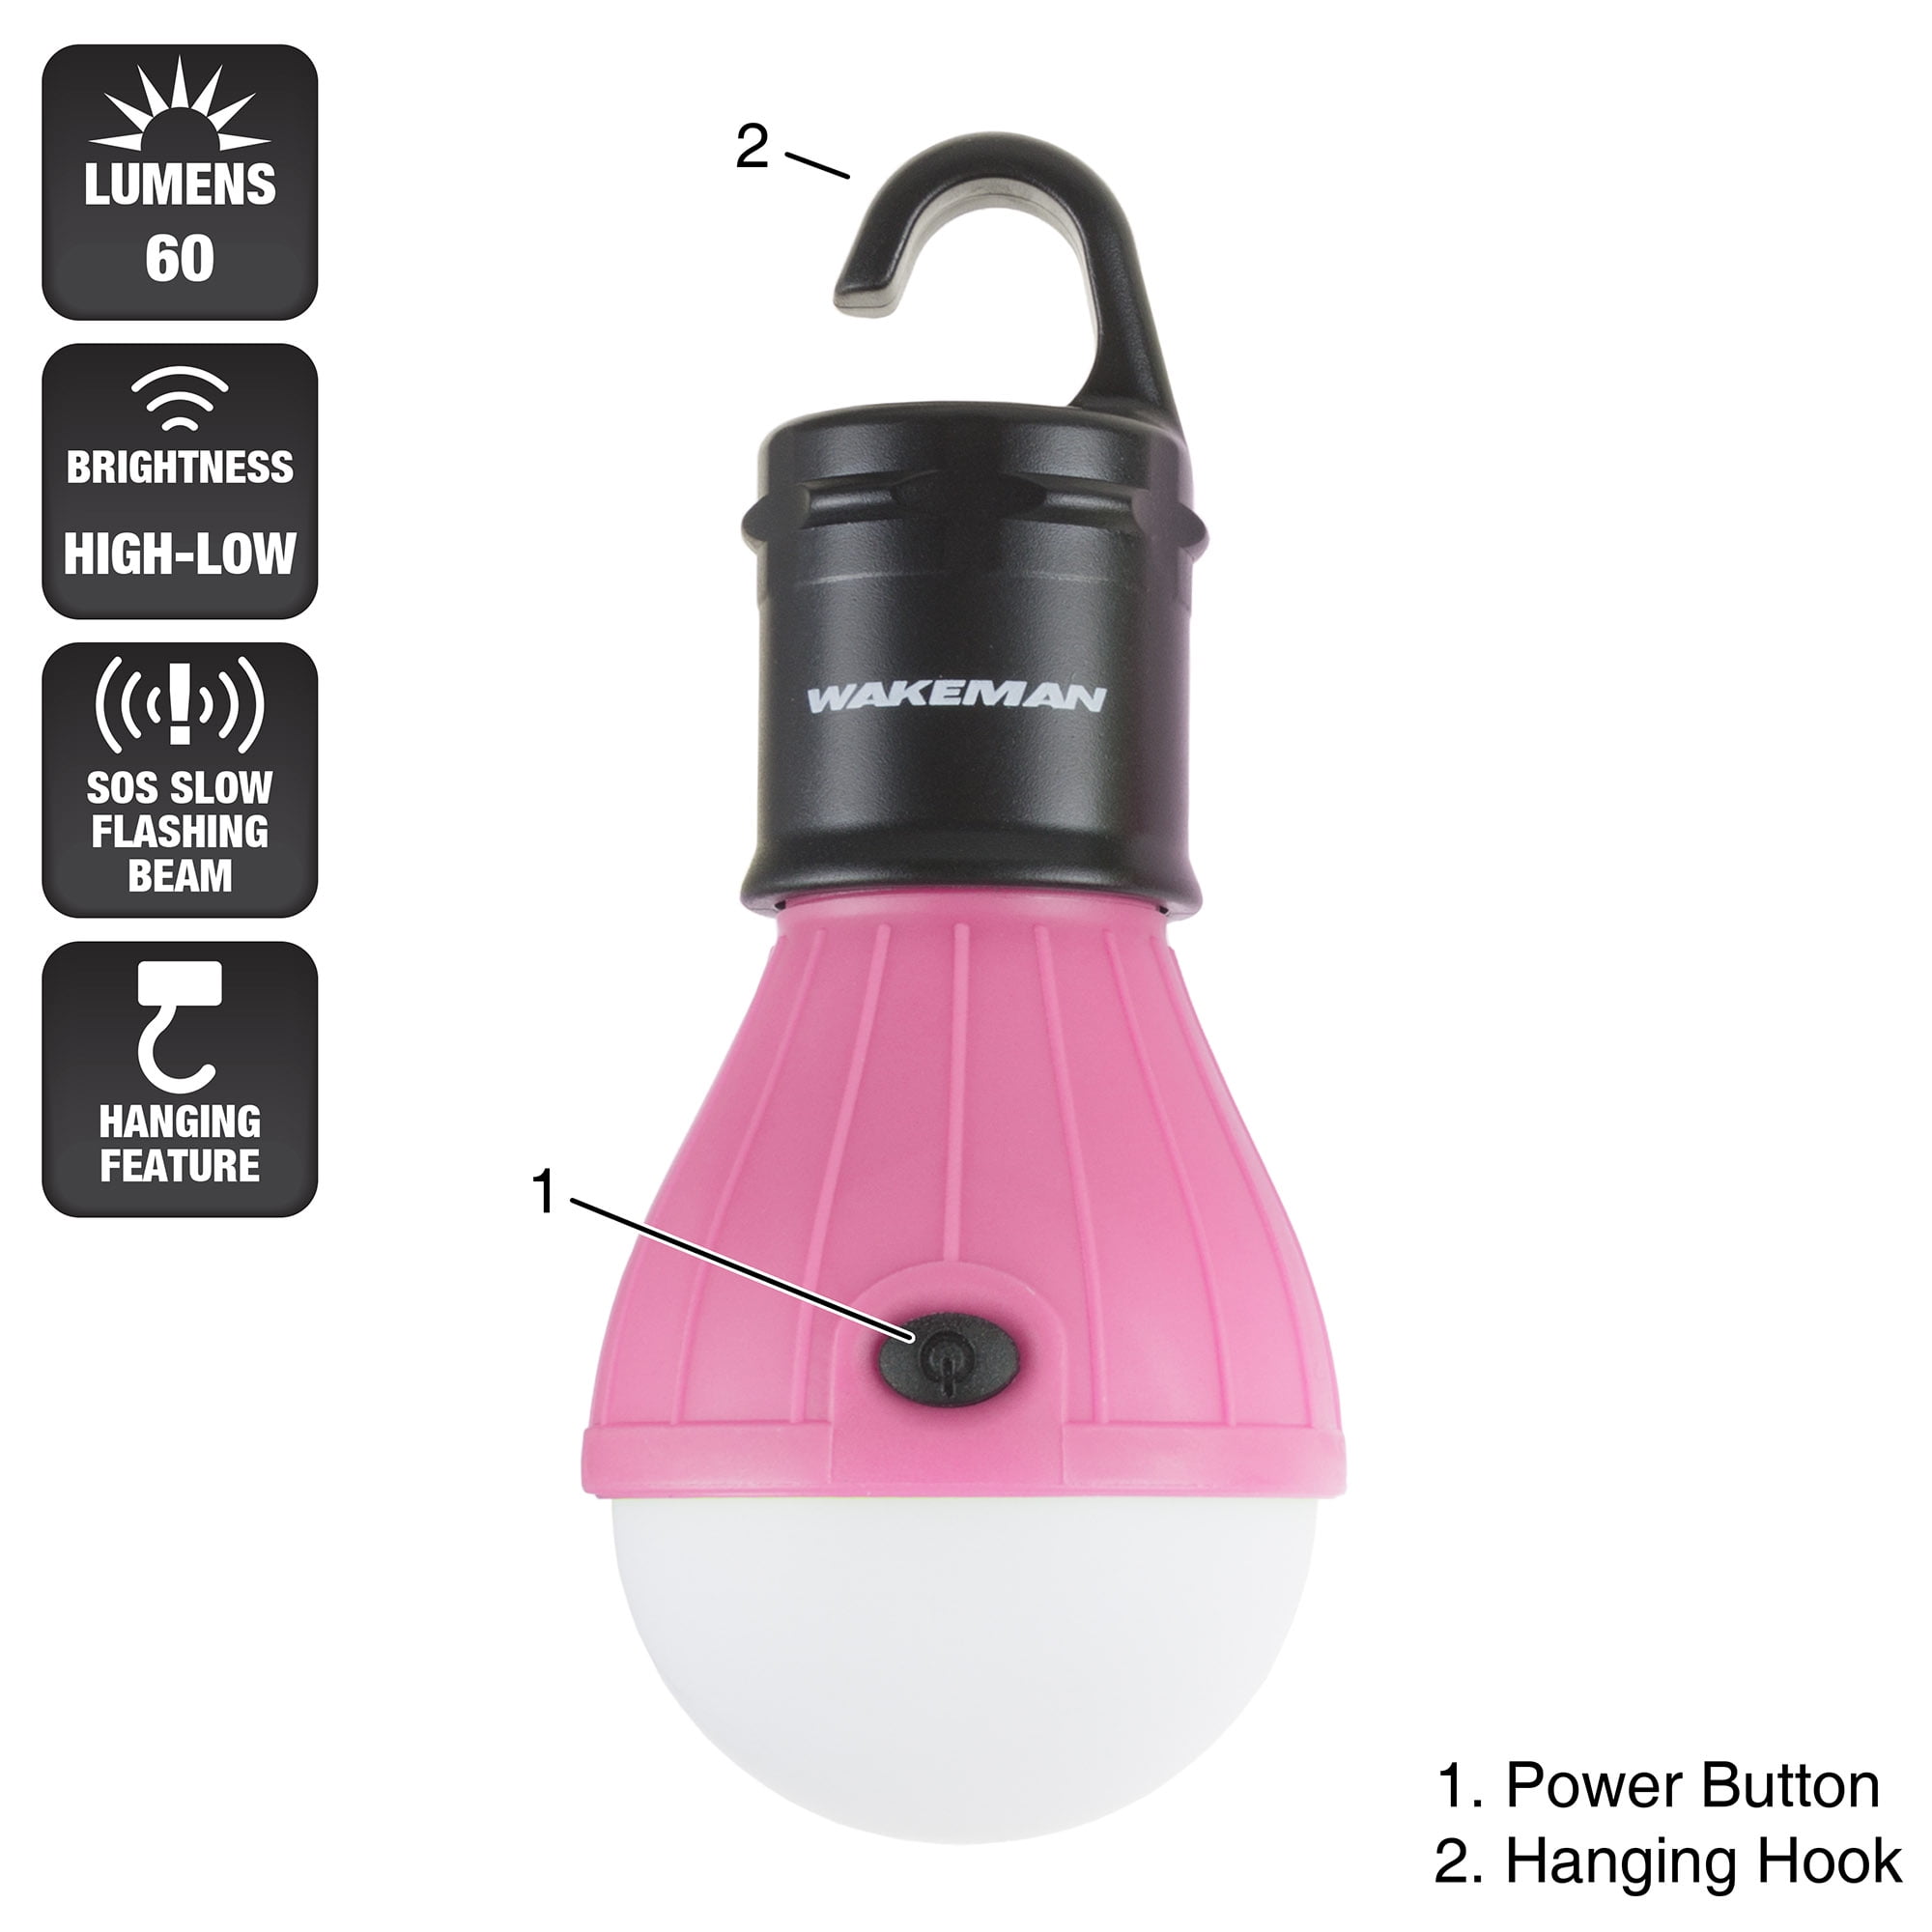 Wakeman Hanging Battery-Powered Lightbulb - Portable LED Outdoor